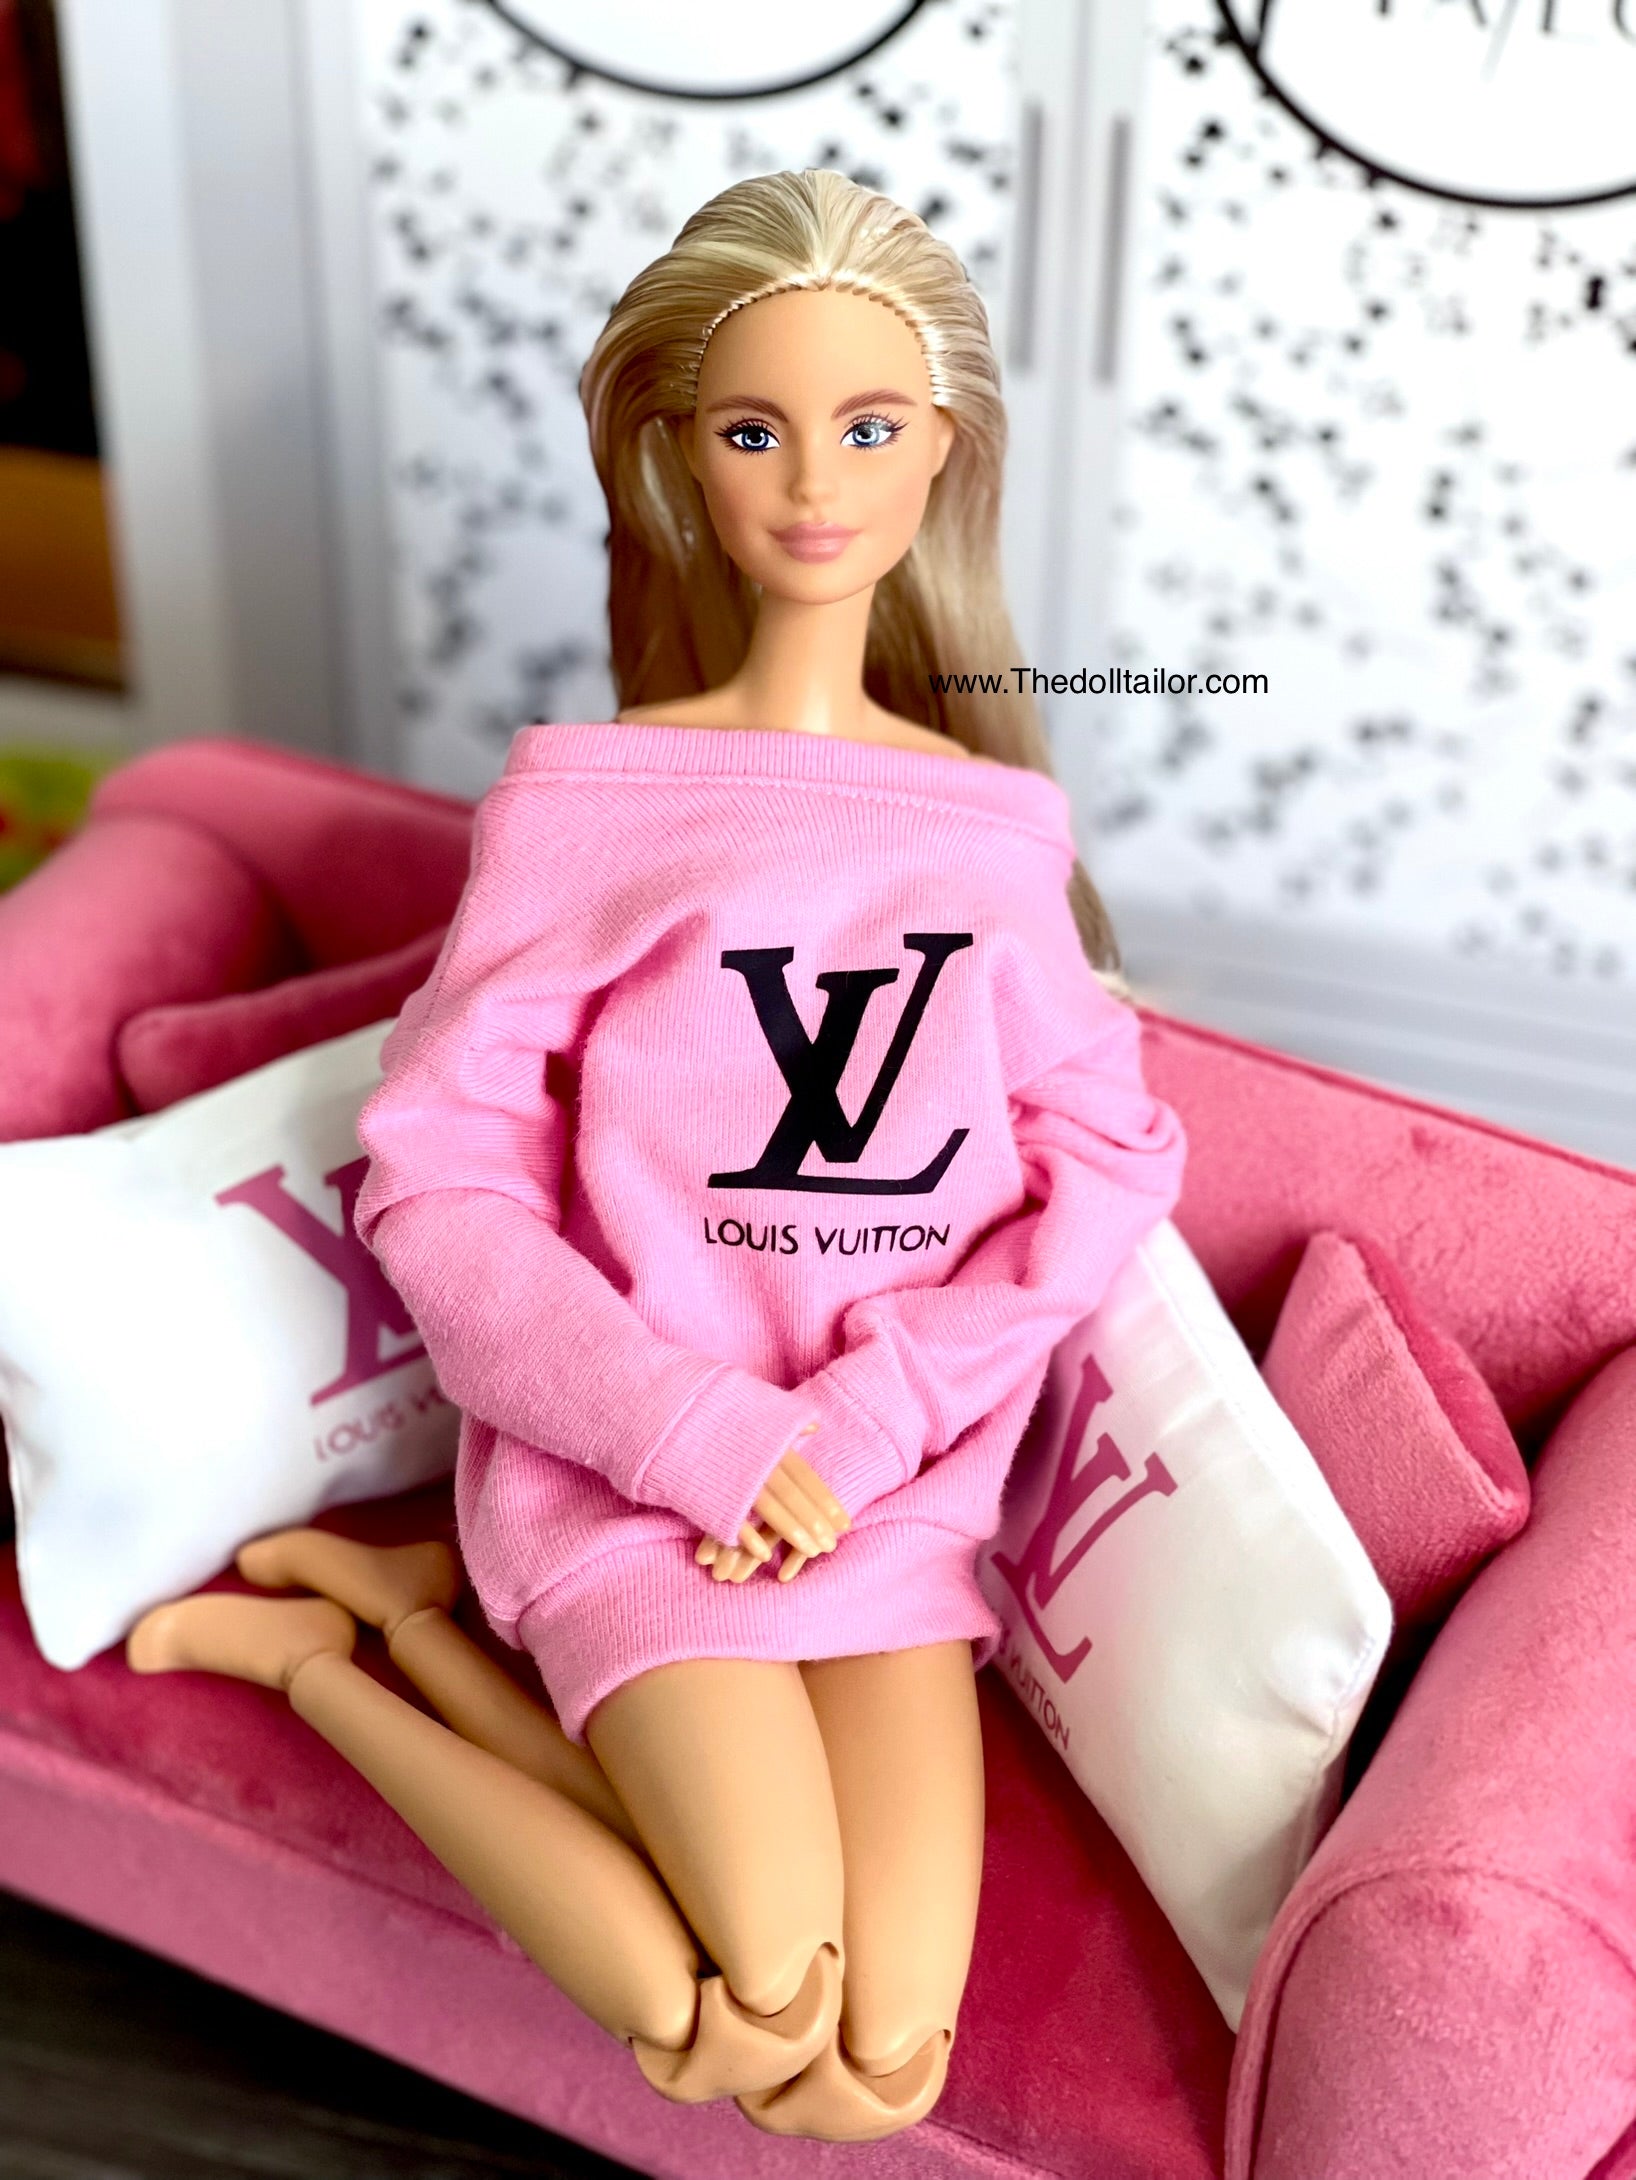 Louis Vuitton  Barbie accessories, Fashion dolls, Beautiful barbie dolls